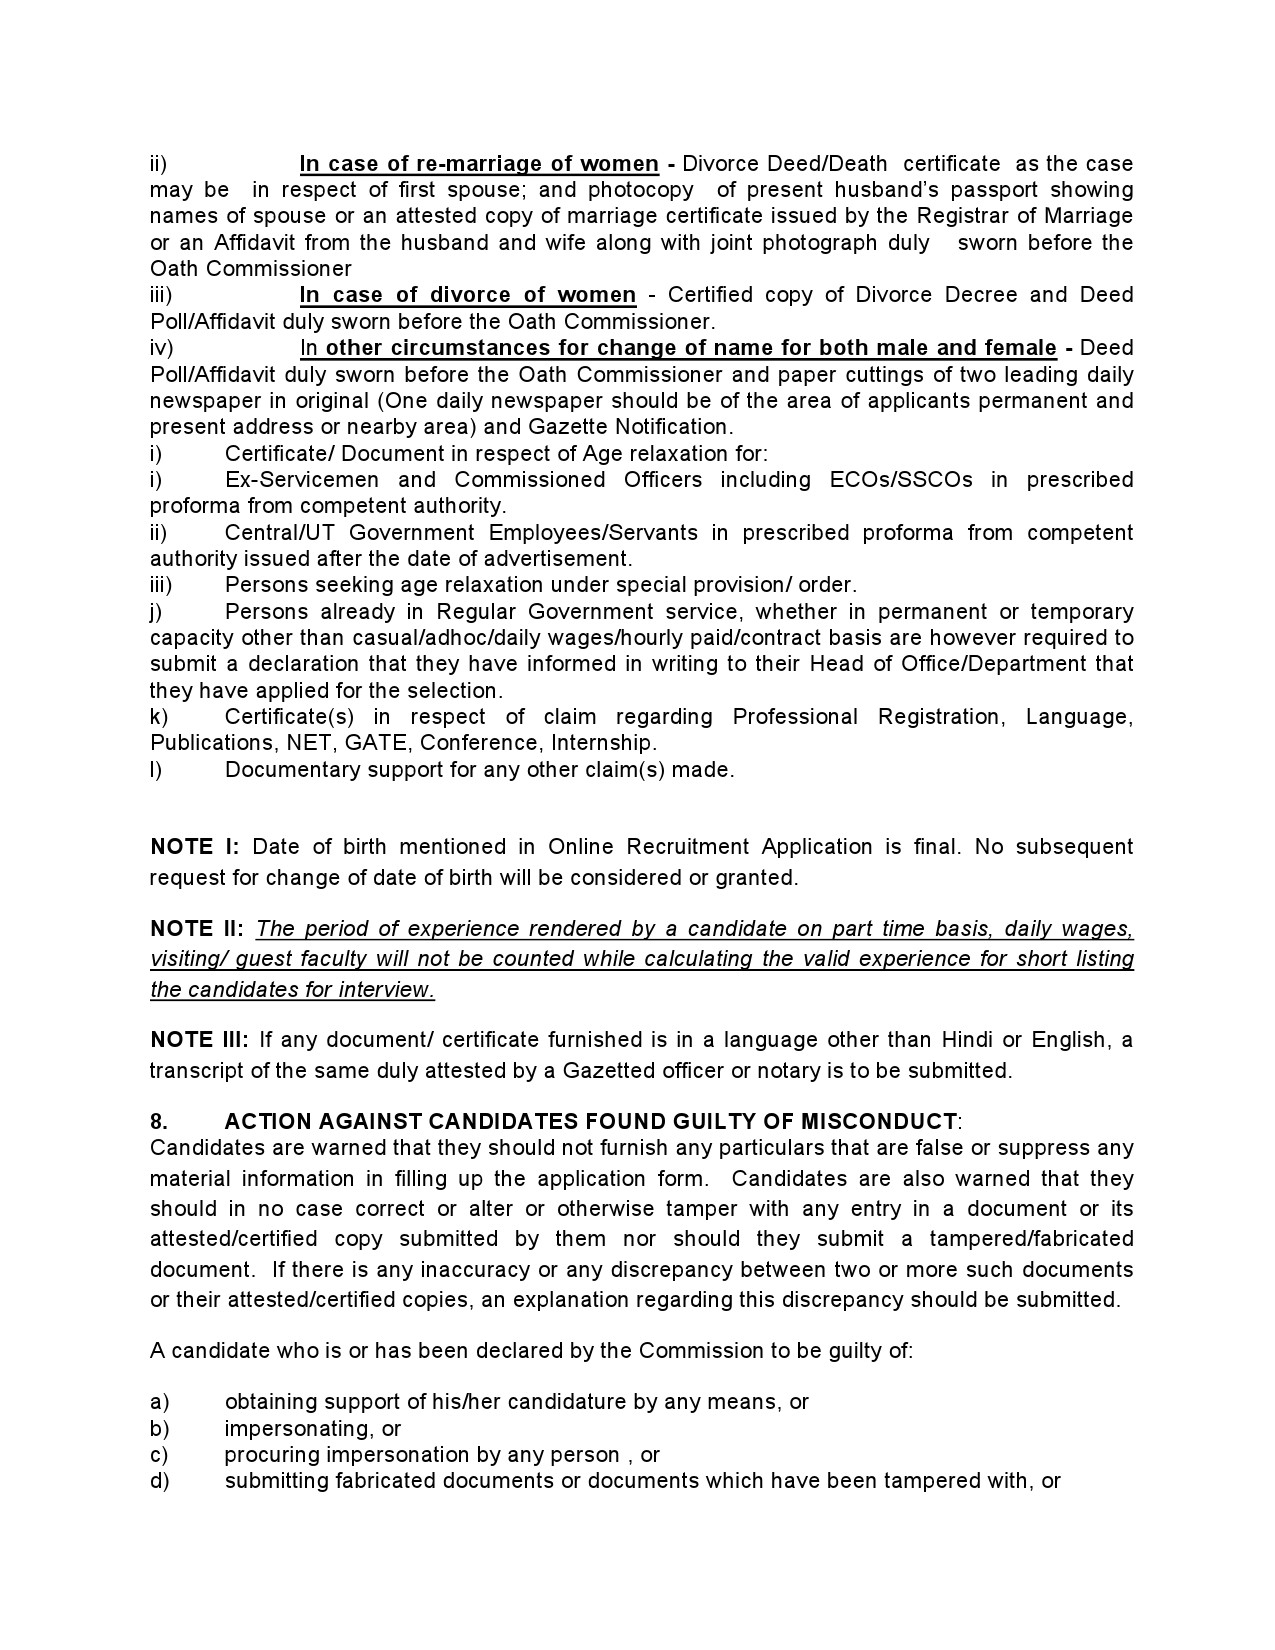 UPSC Notification 042021 for Multiple vacancies - Notification Image 15